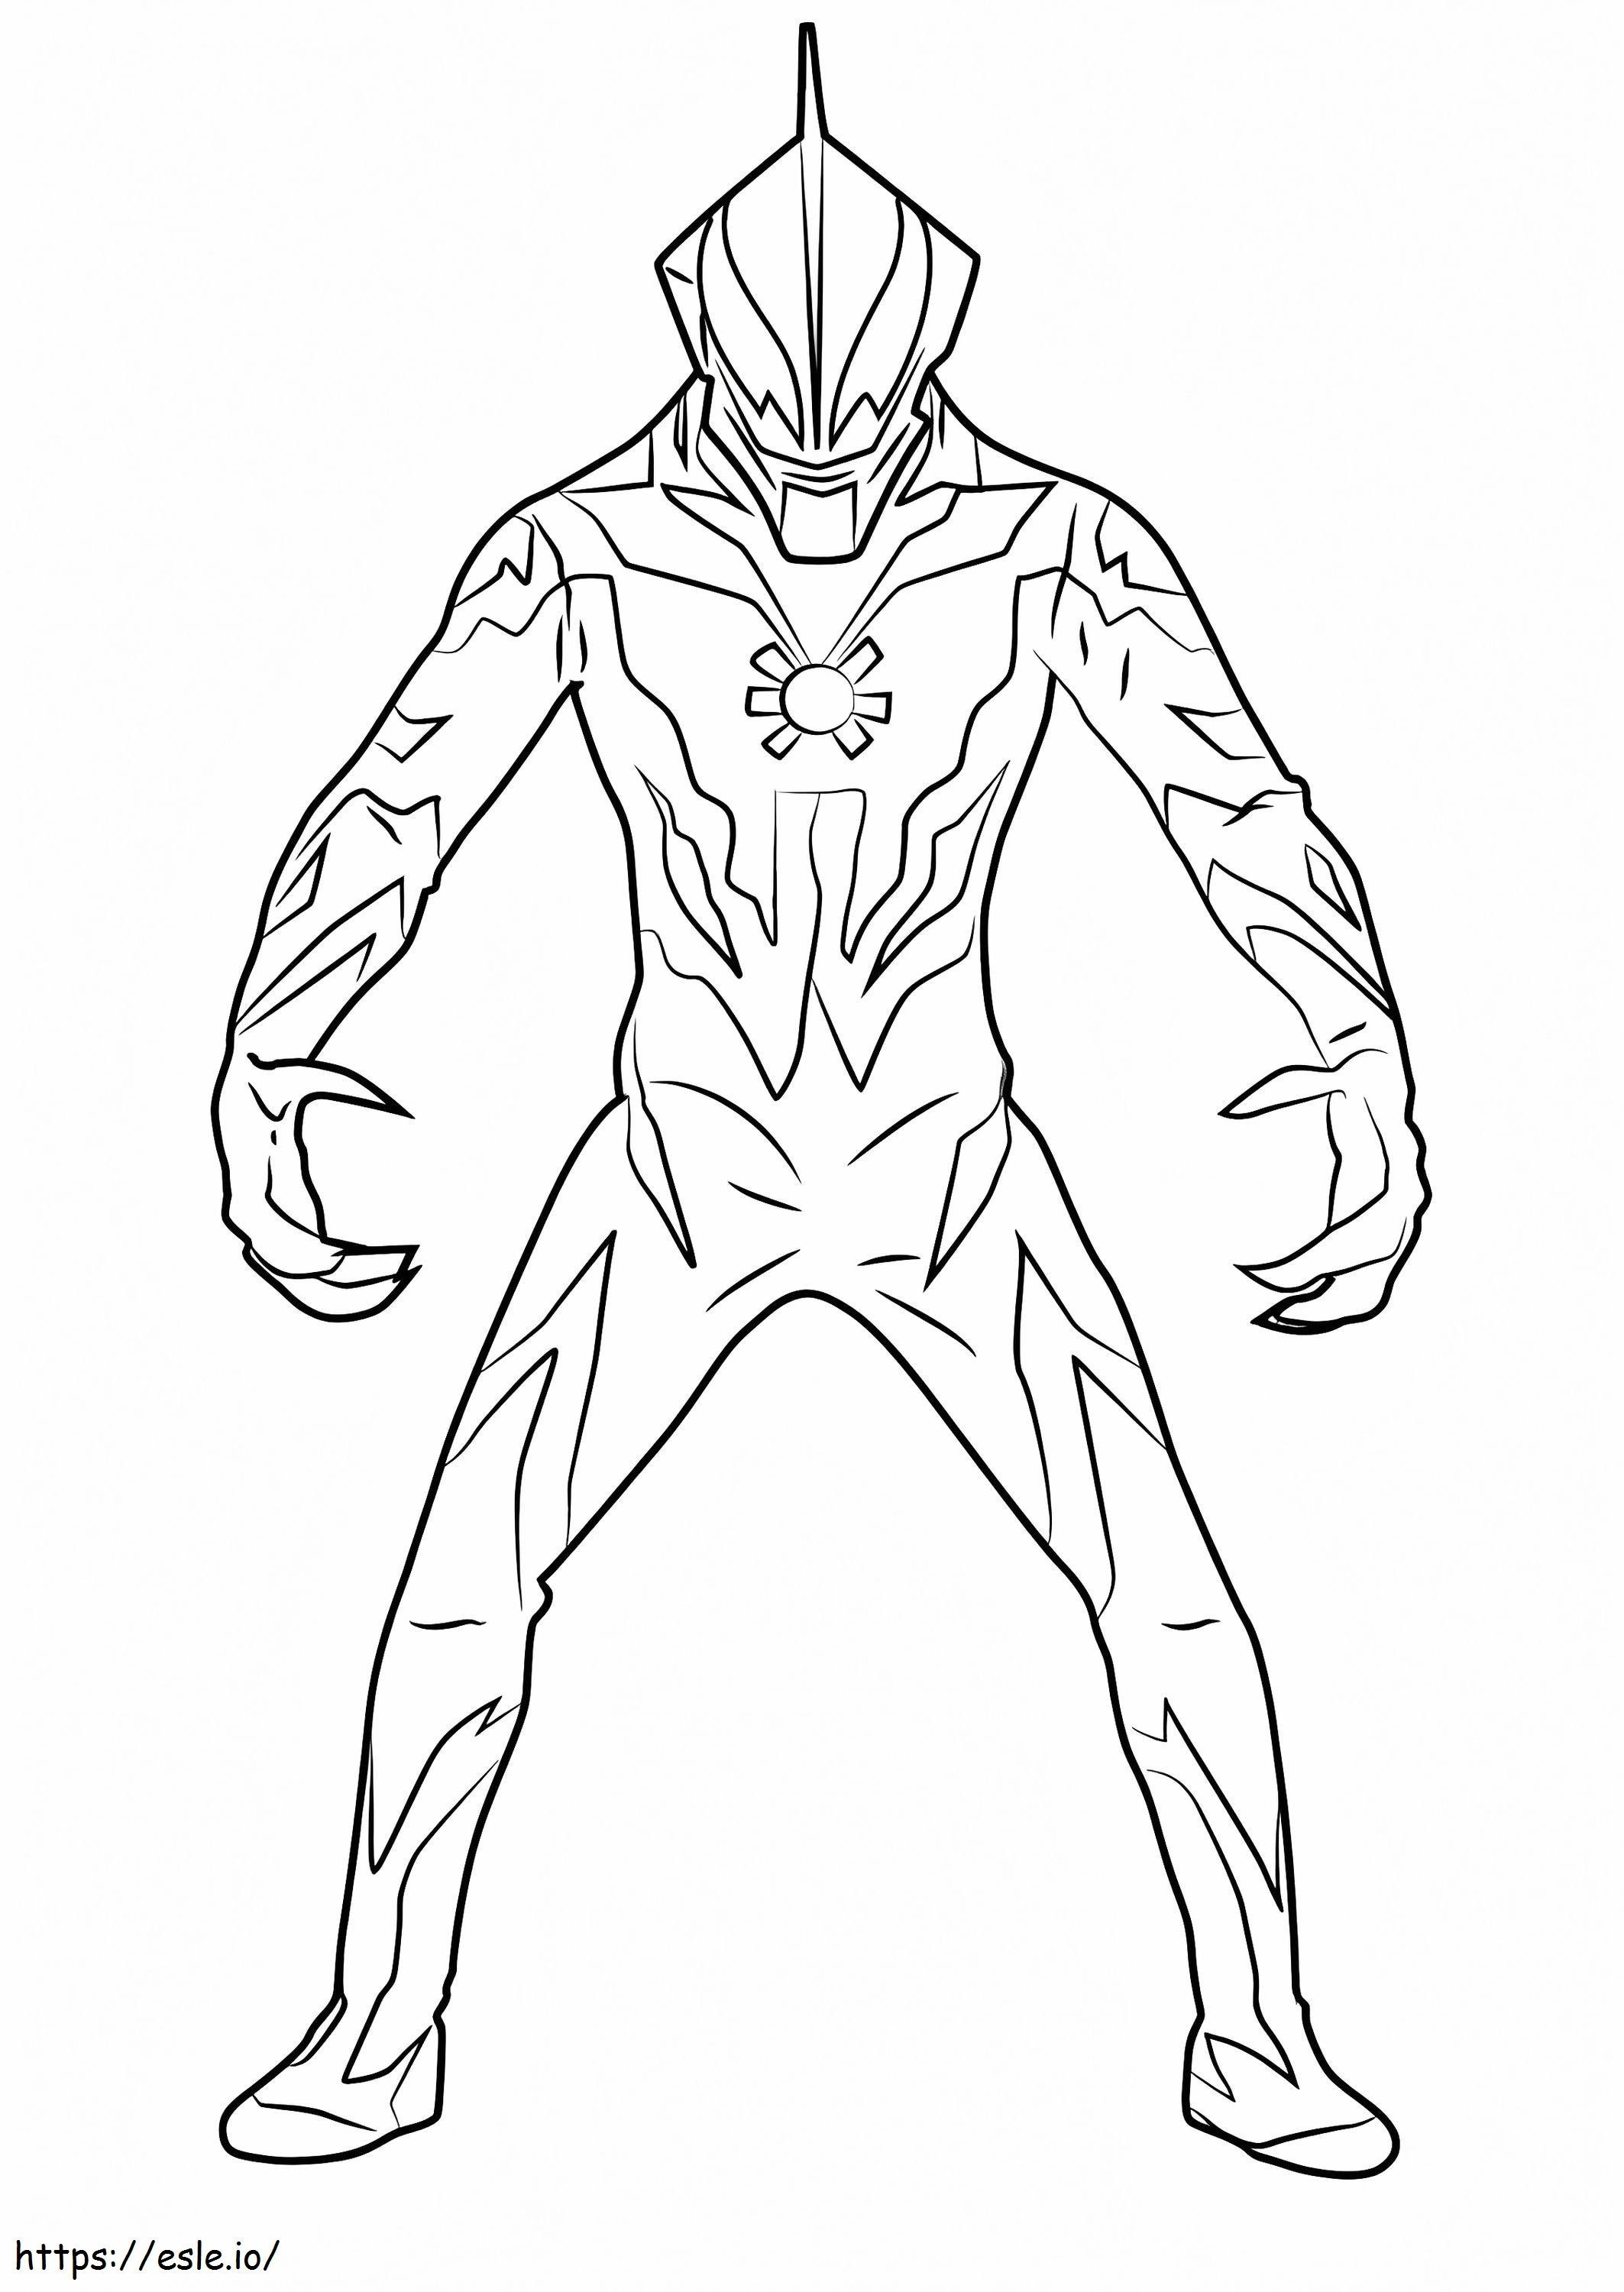 Ultraman Belial coloring page